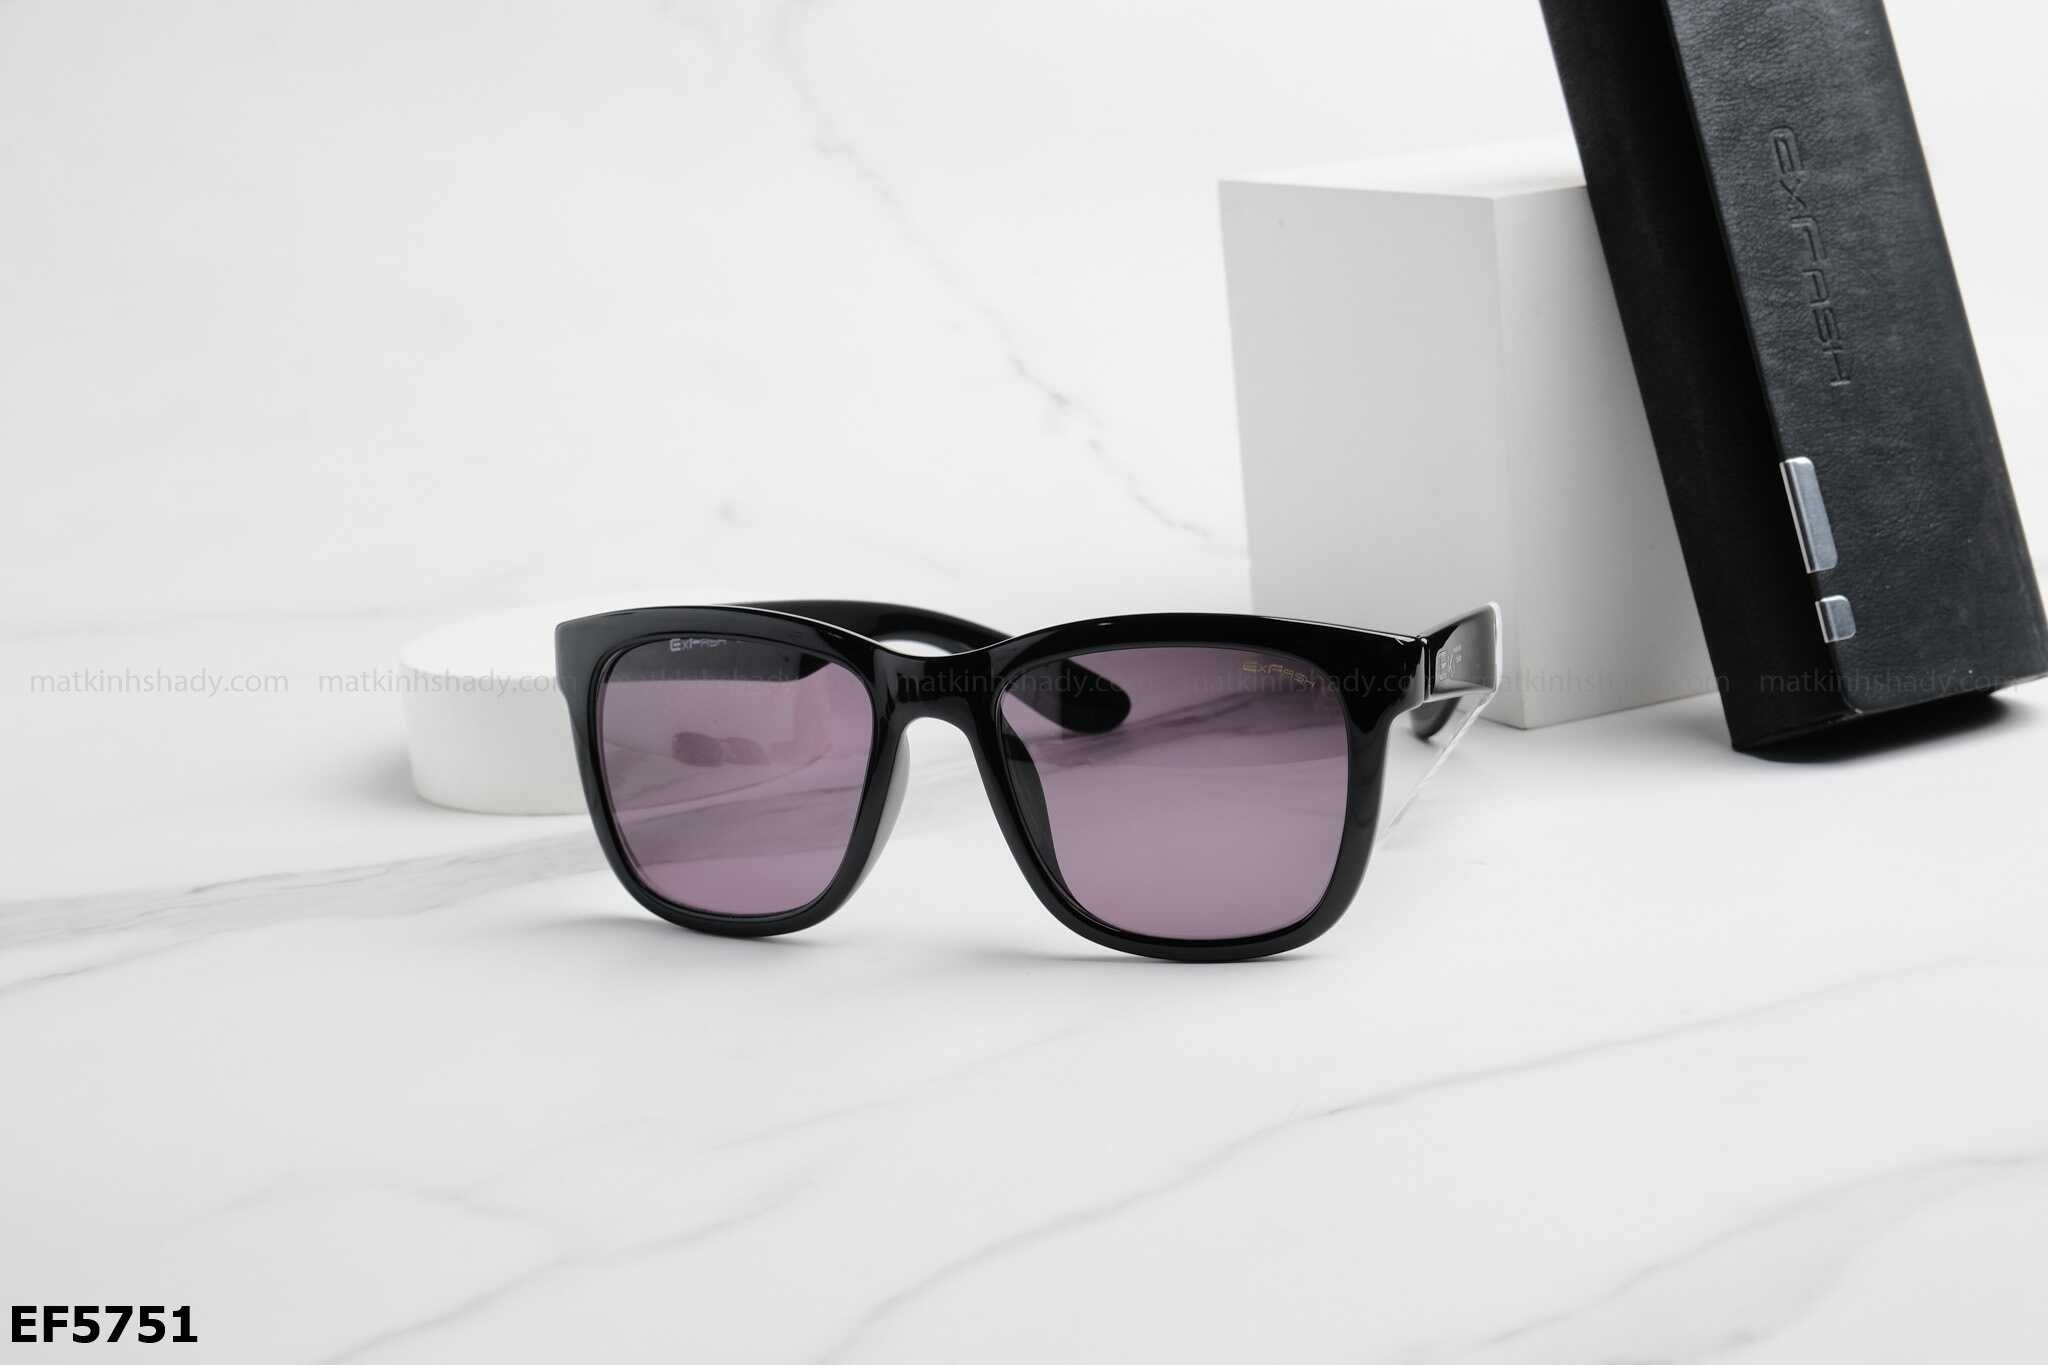  Exfash Eyewear - Sunglasses - EF5751 